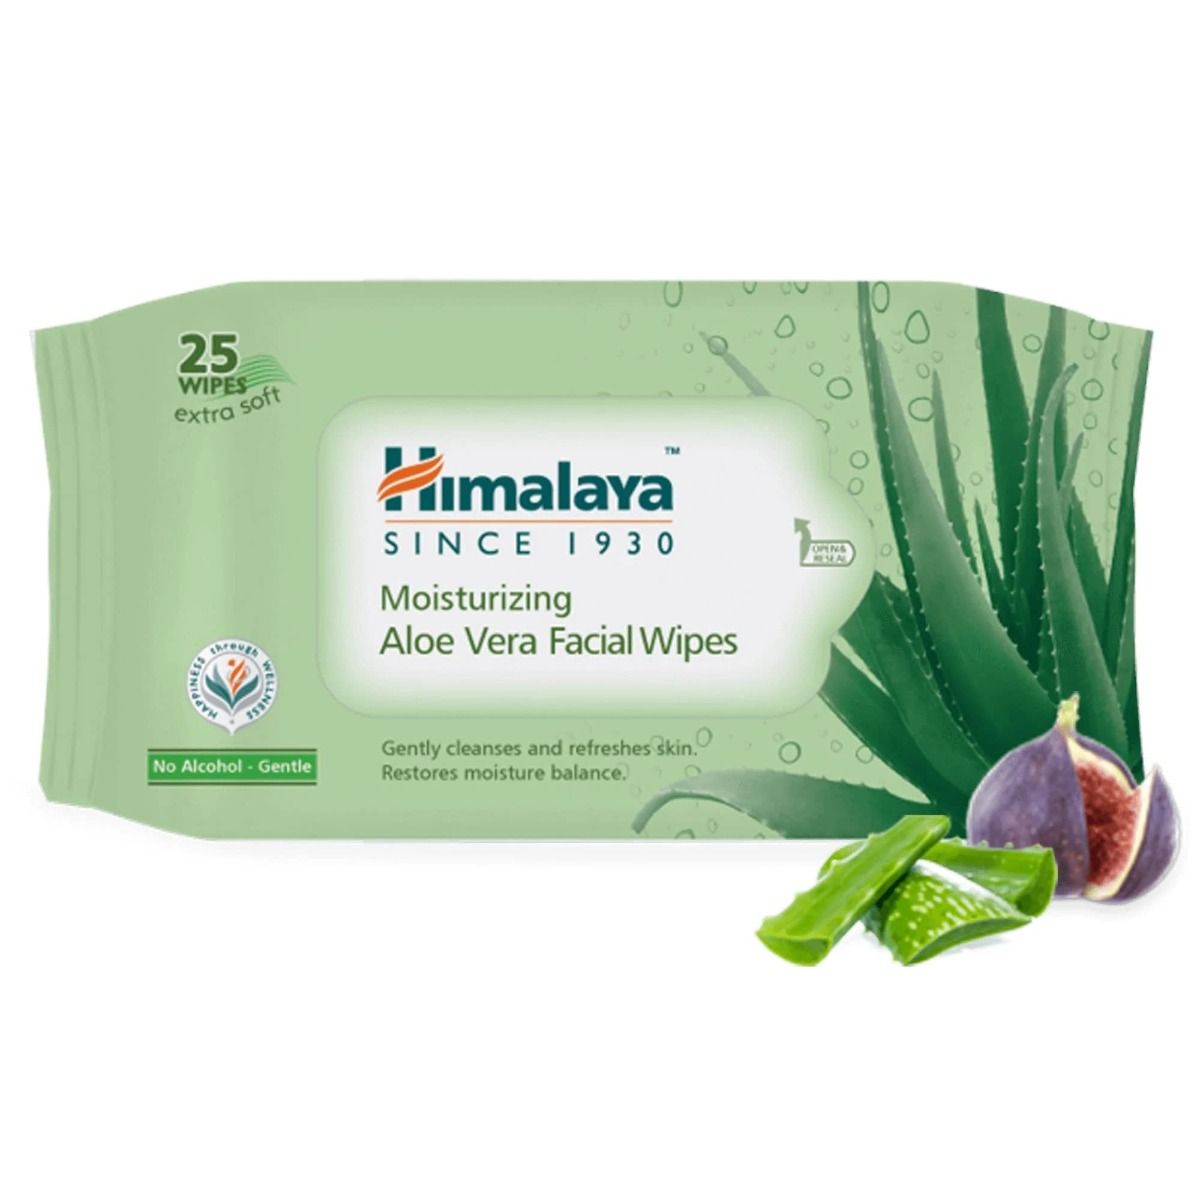 Buy Himalaya Moisturizing Aloe Vera Facial Wipes, 25 Count Online